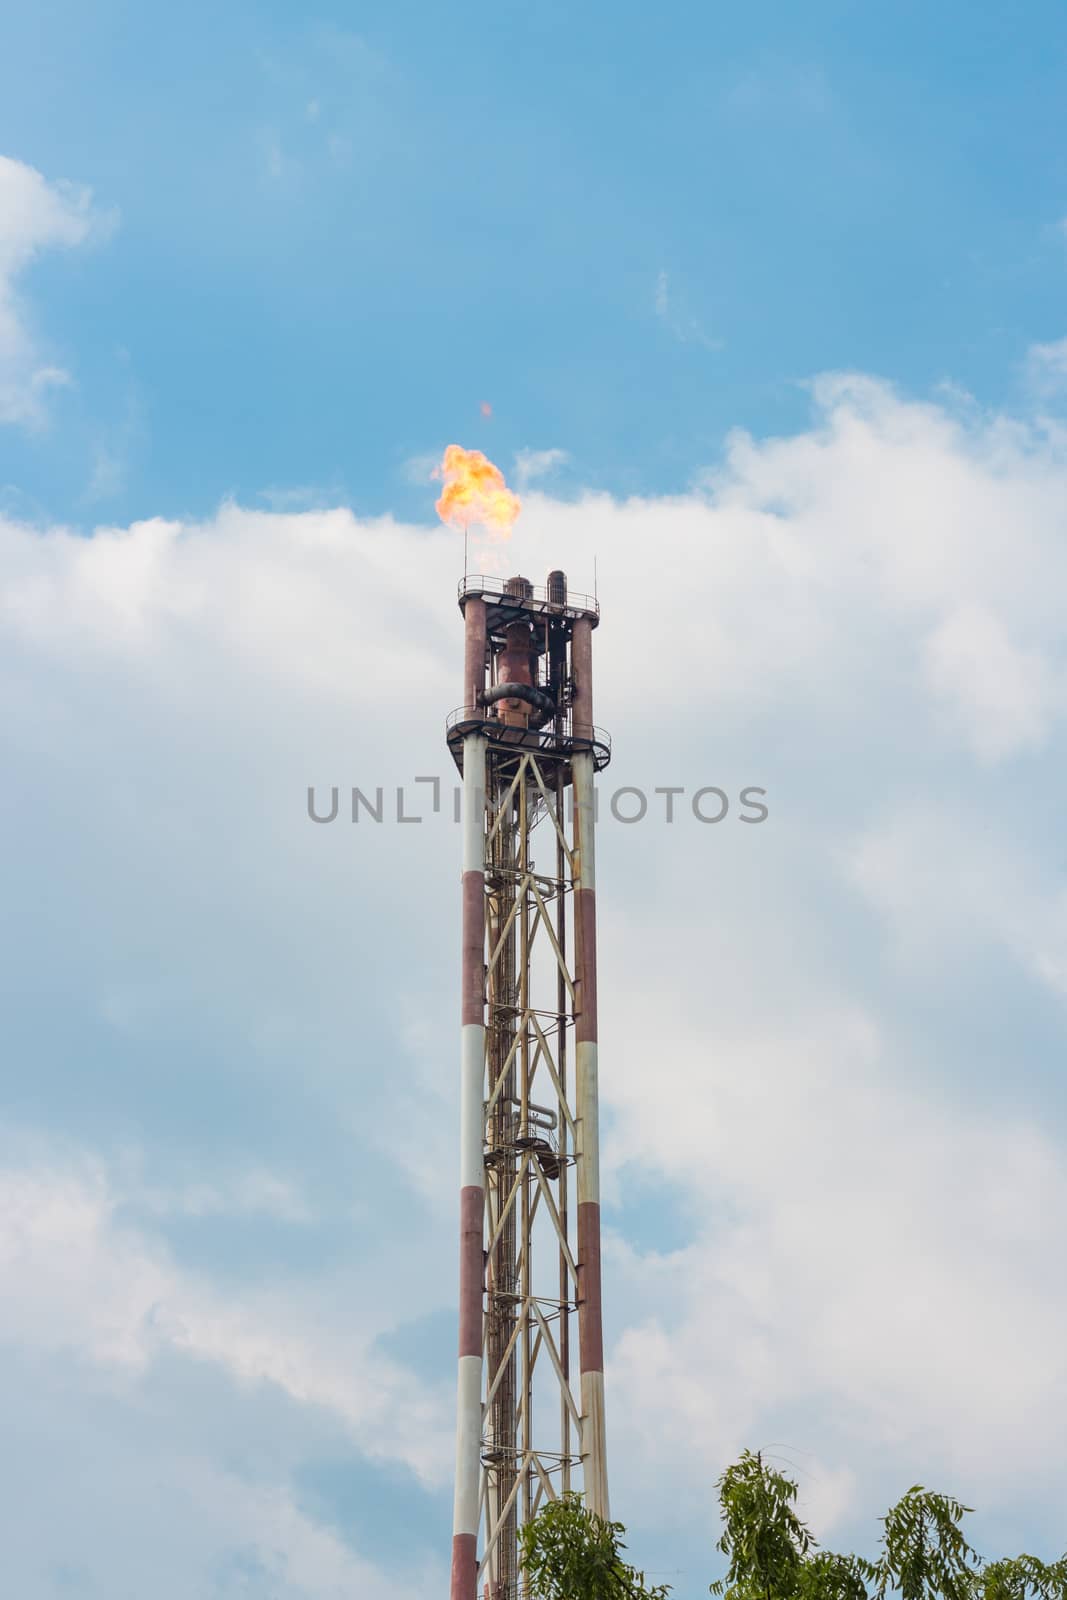 oil refining on blue sky